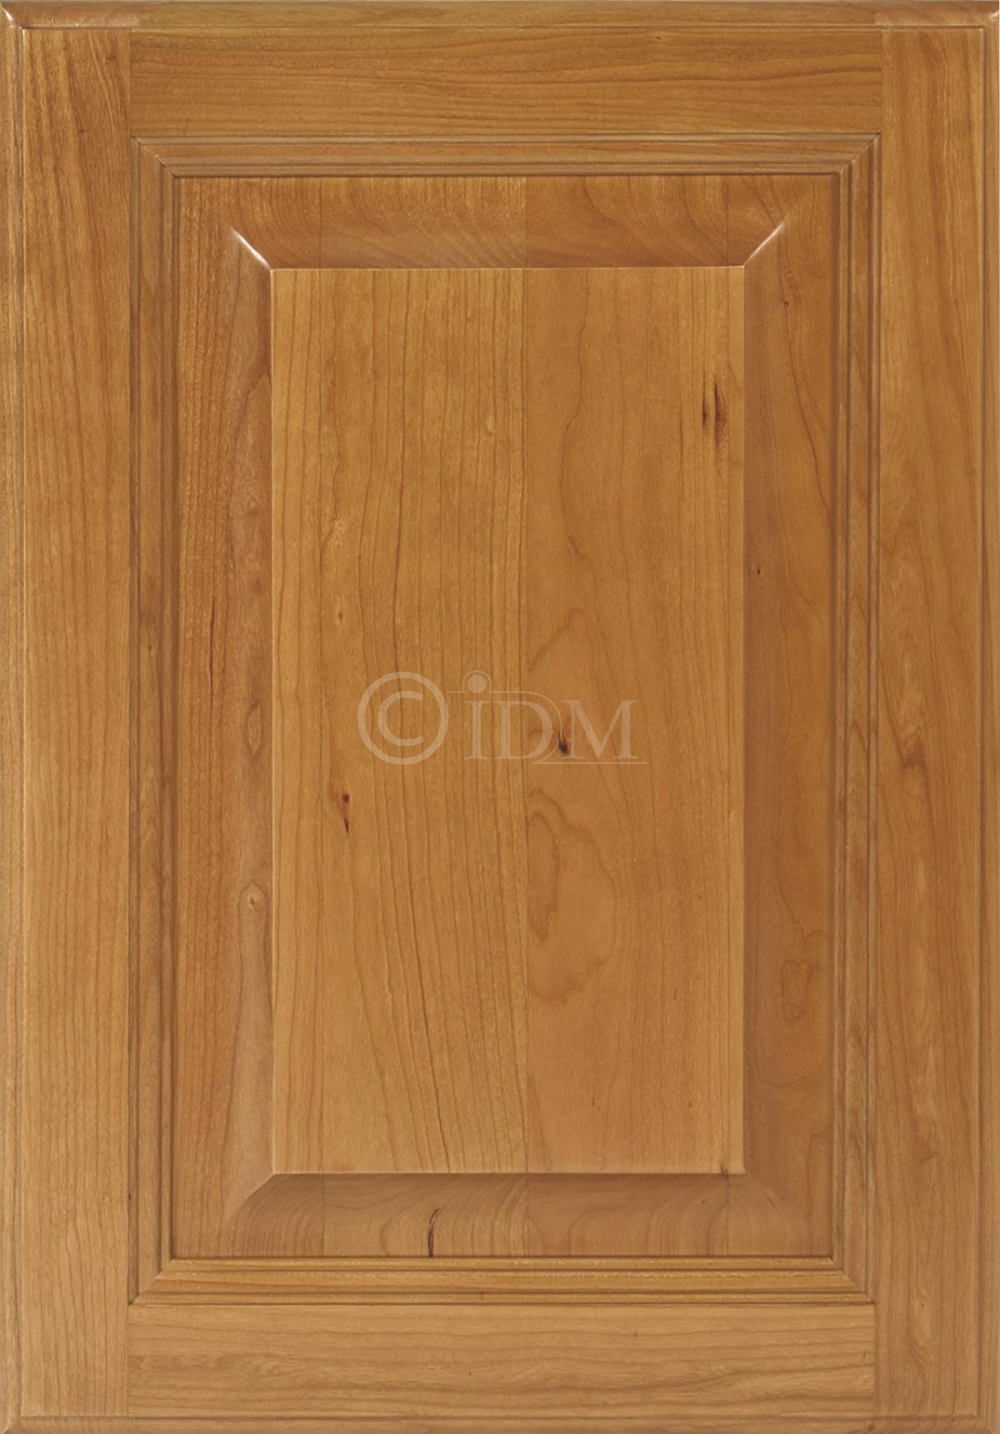 Irelands Largest Range Of 100 Solid Wood Cabinet Doors Solid Wood Kitchen Doors Made To Measure In Northern Ireland By In Doors Manufacturing